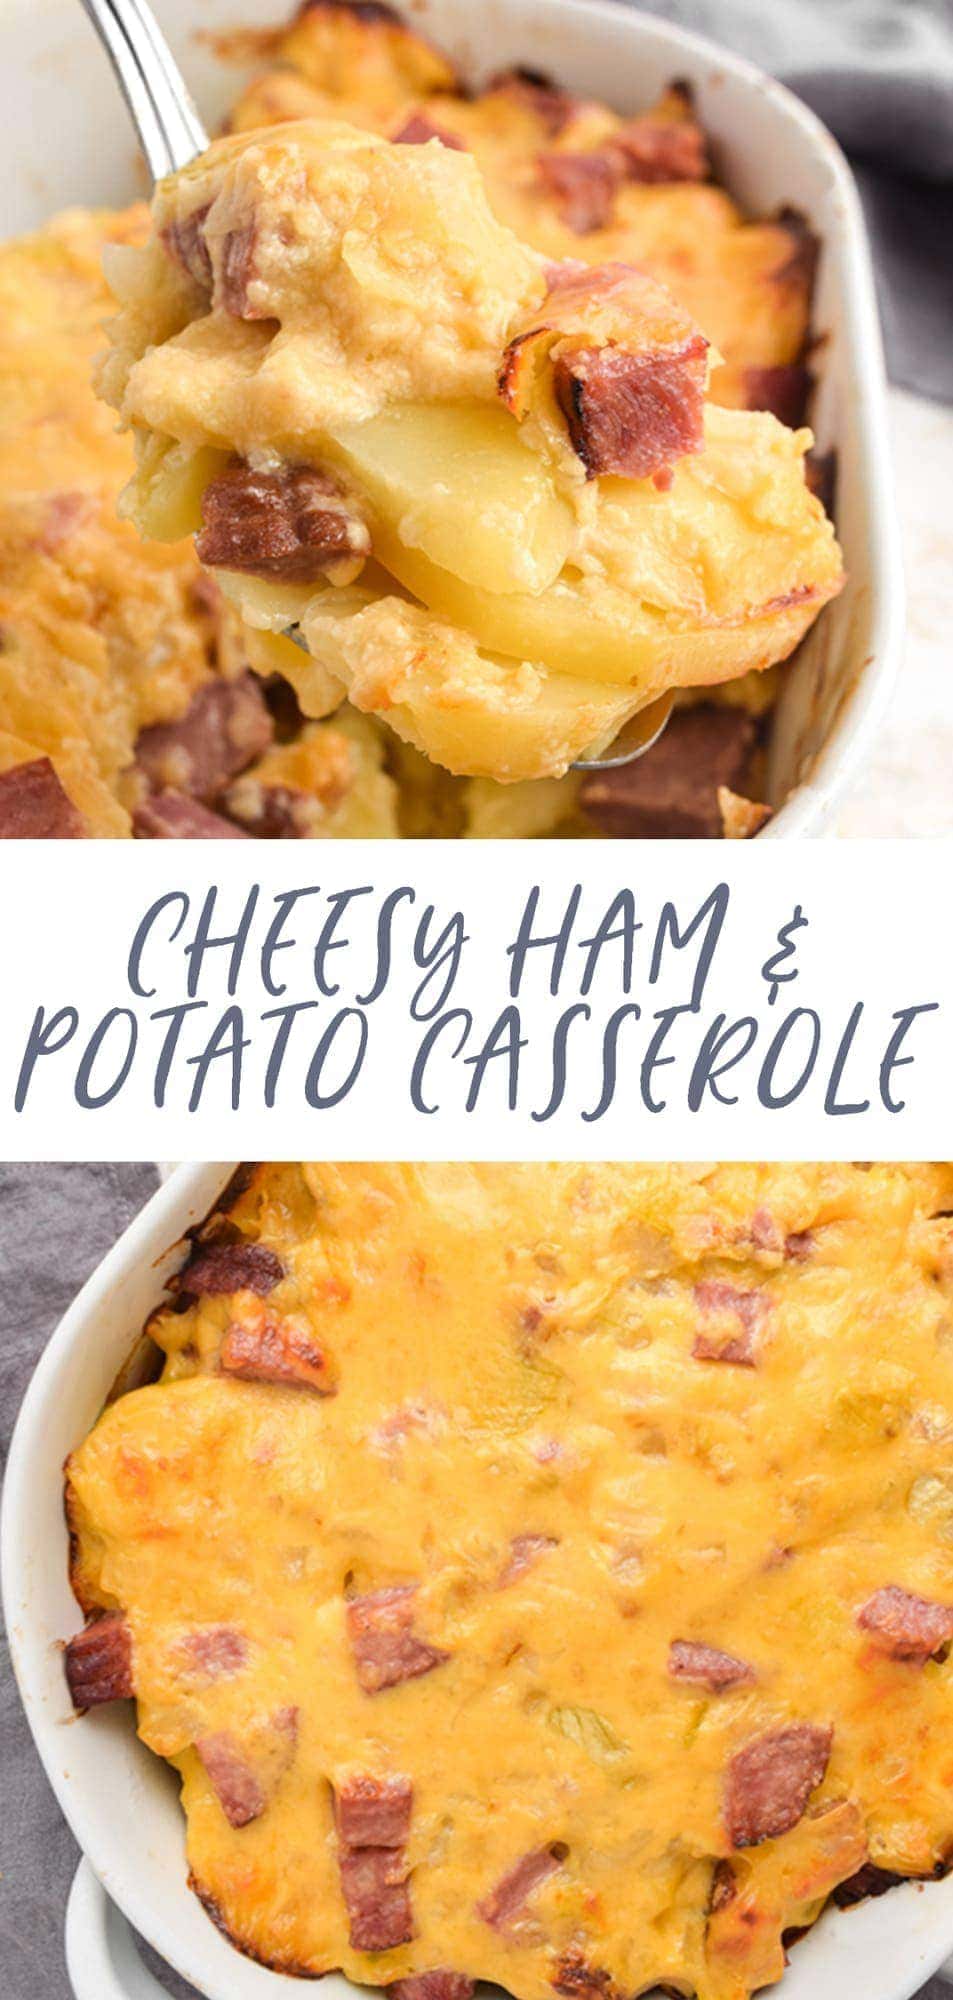 Cheesy Ham and Potato Casserole - 40 Aprons